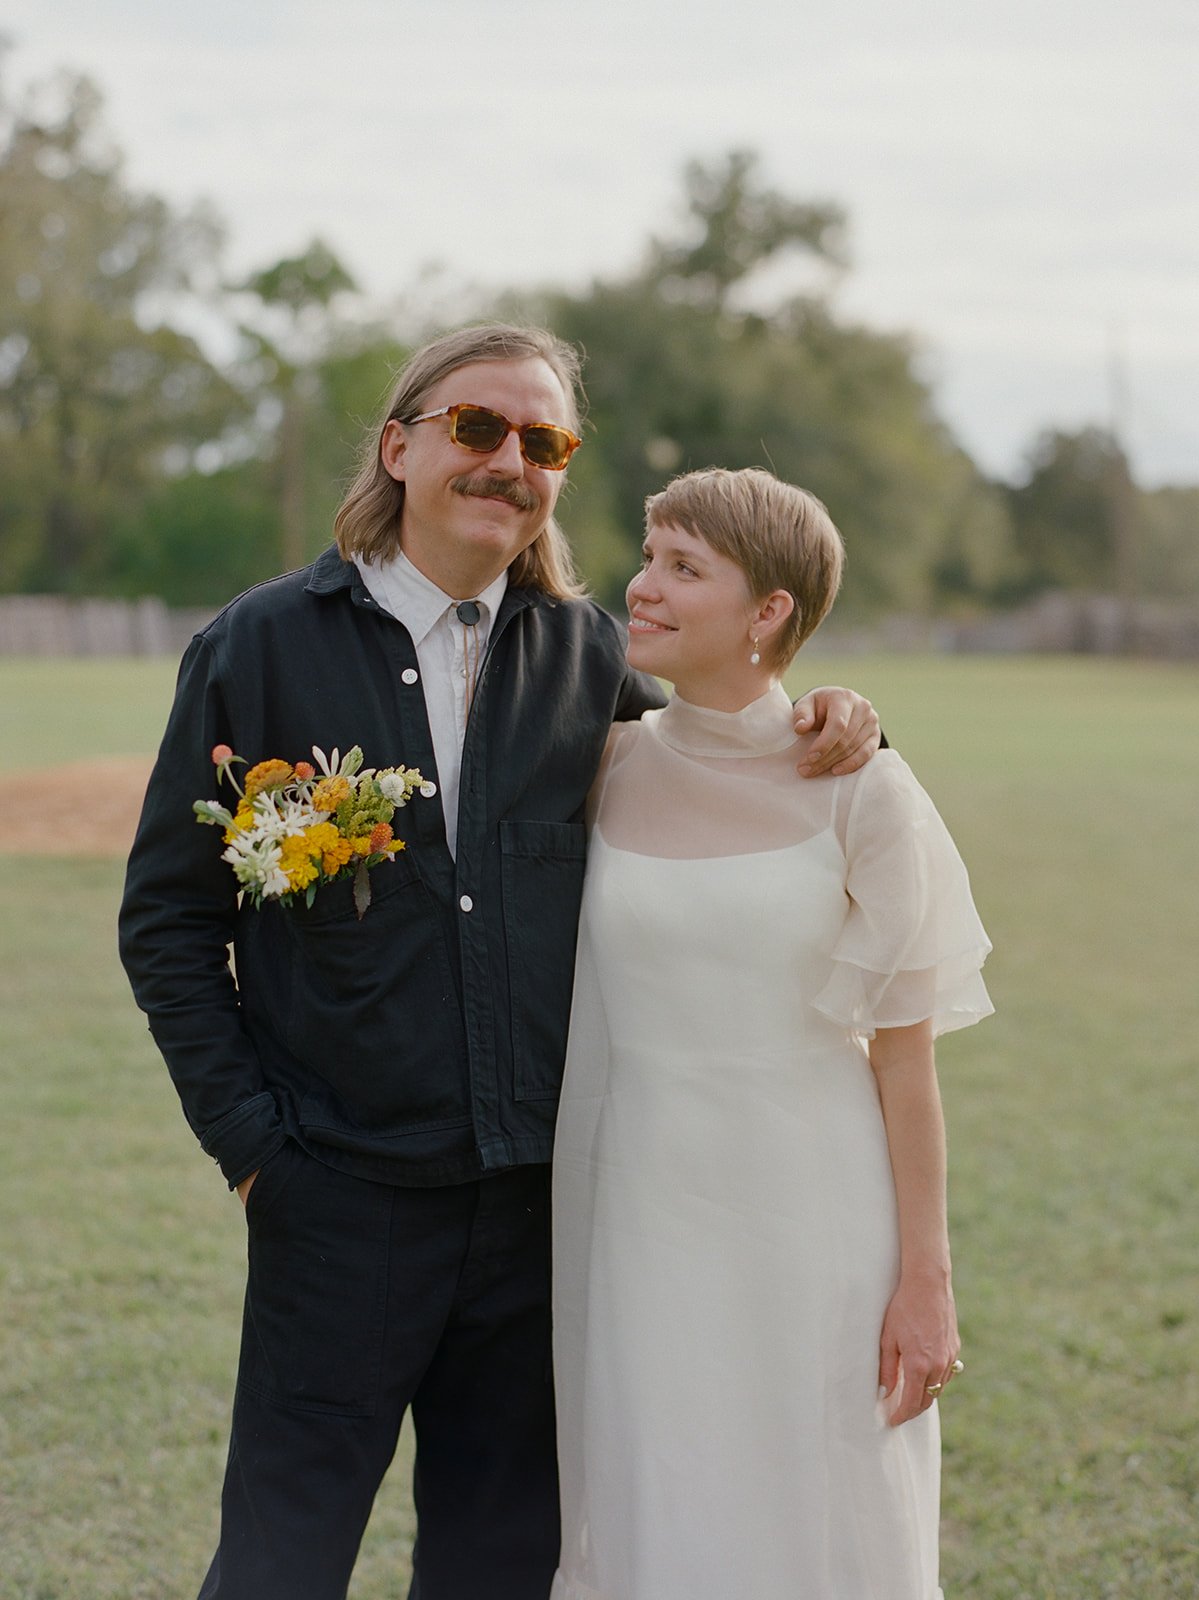 Best-Film-35mm-Austin-Wedding-Photographer-the-Long-time-Super8-46.jpg